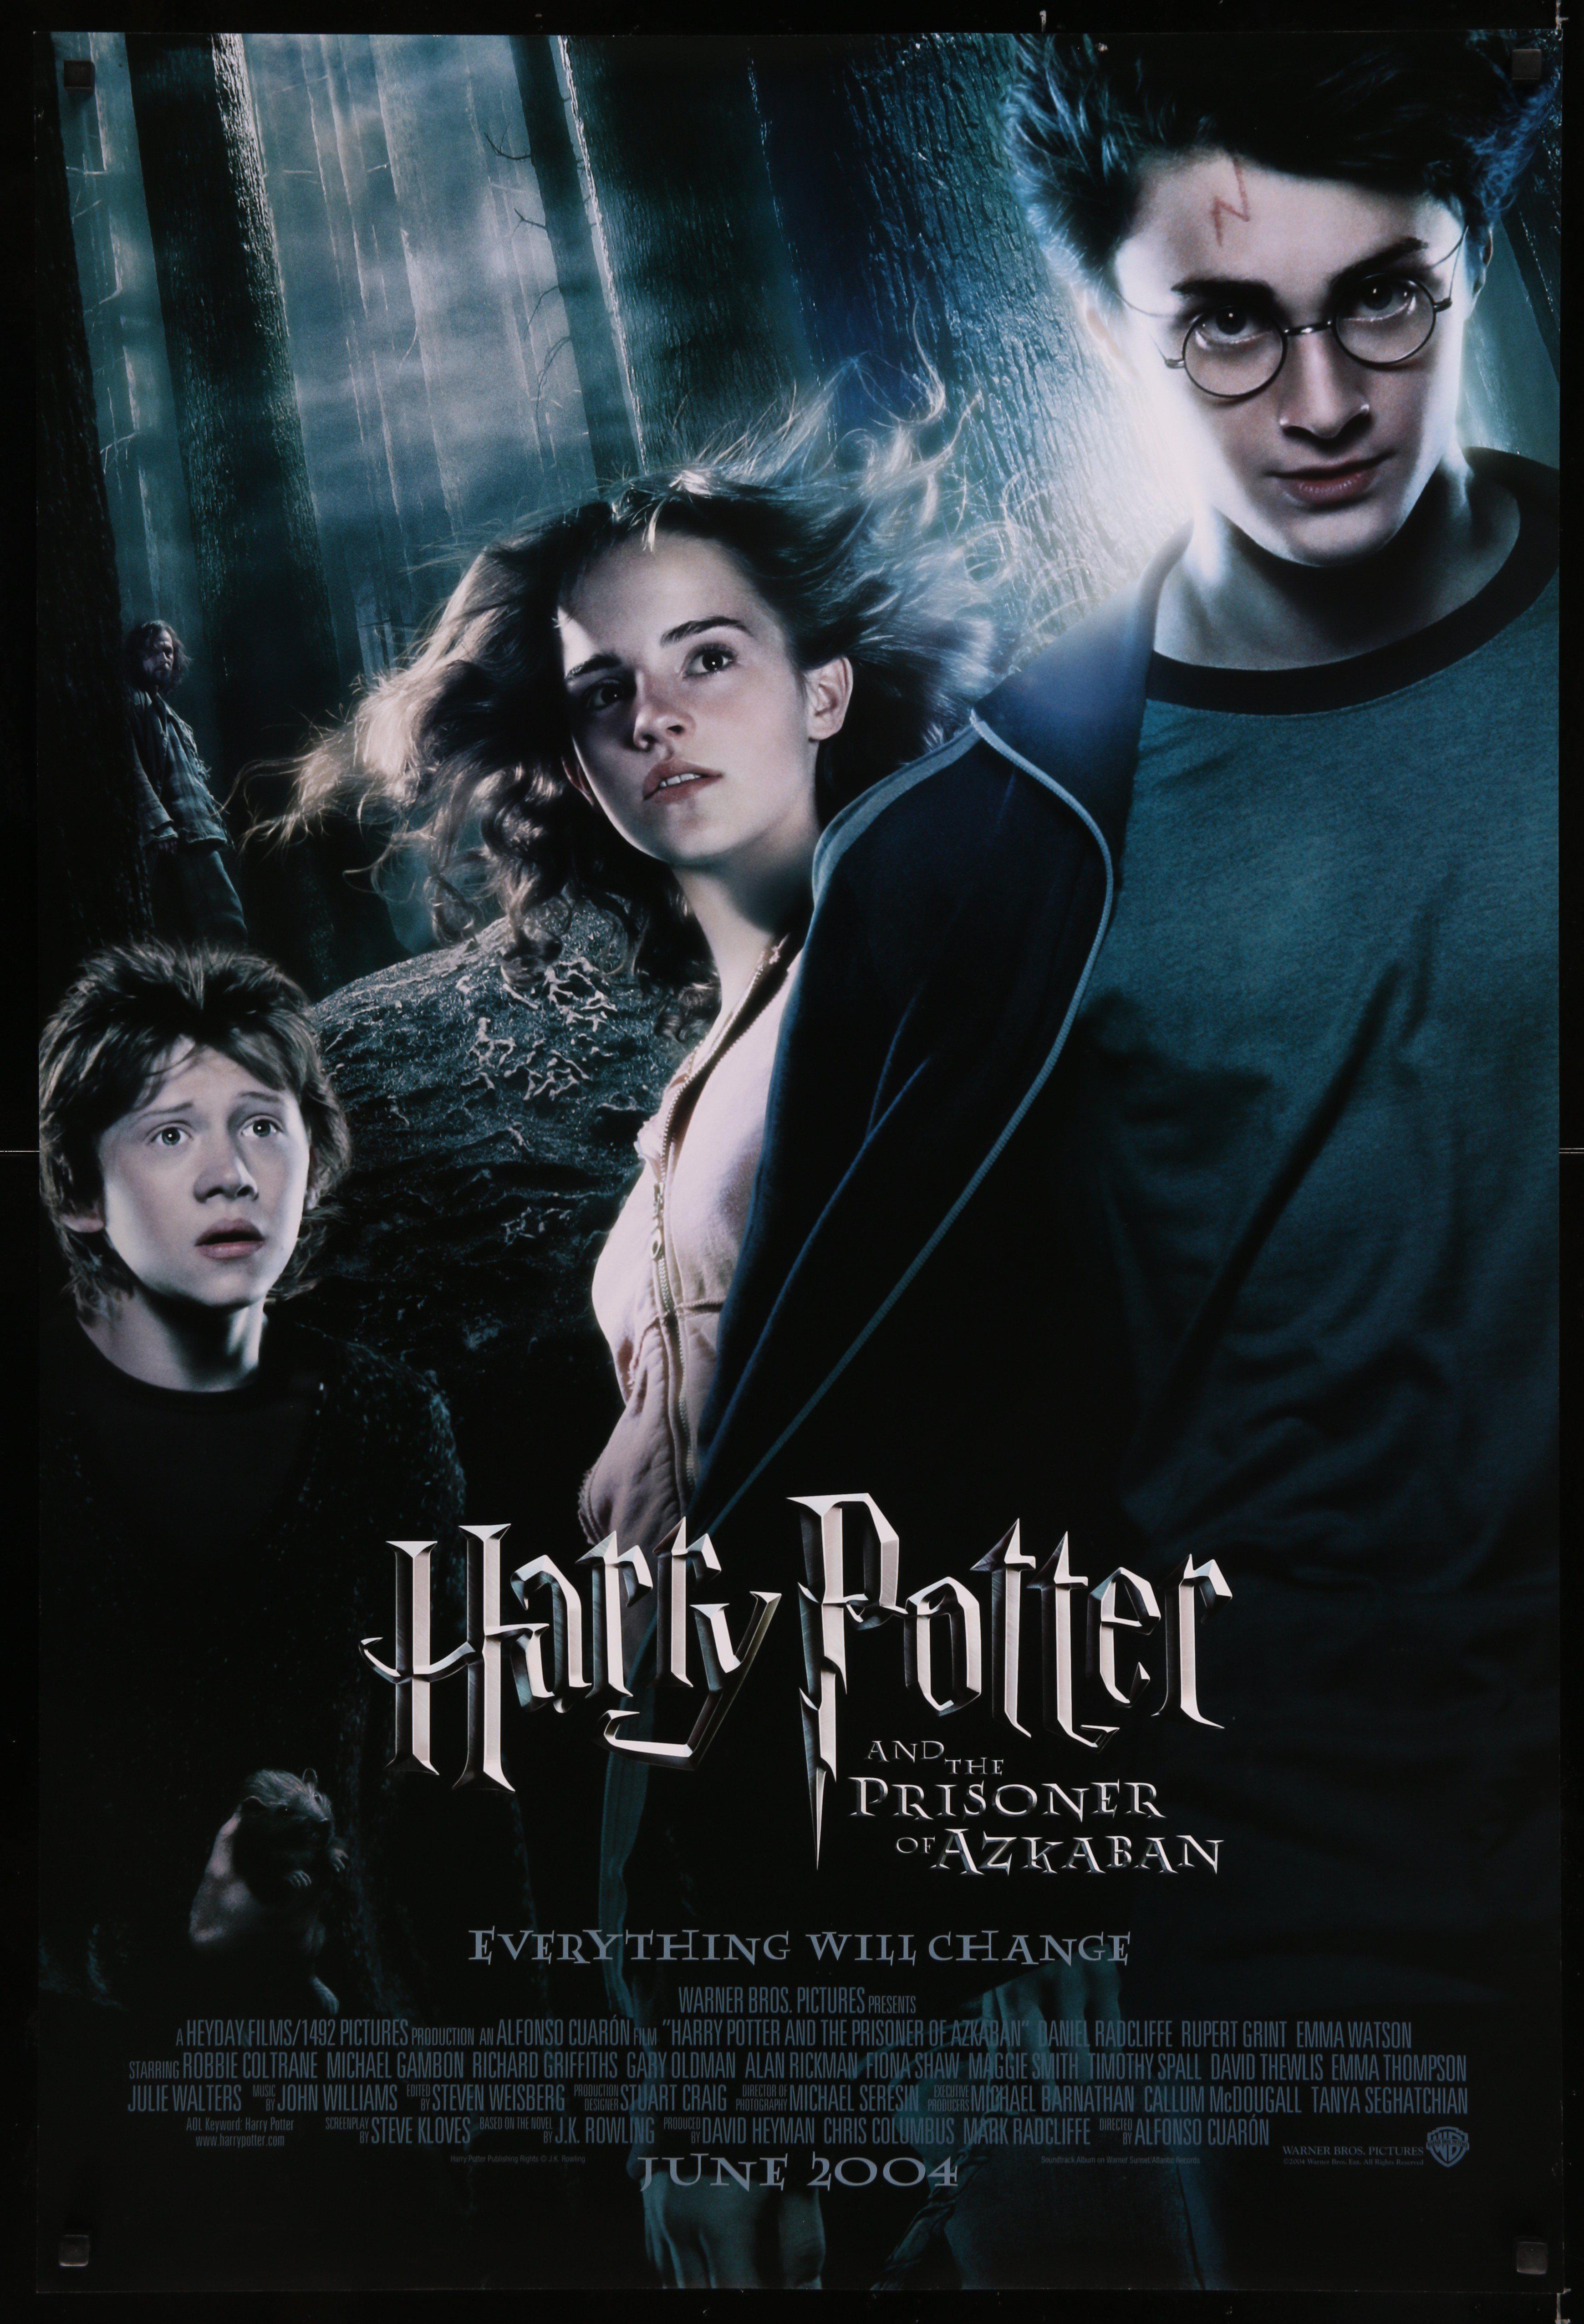 Harry Potter and the Prisoner of Azkaban Movie Poster | 1 Sheet (27x41